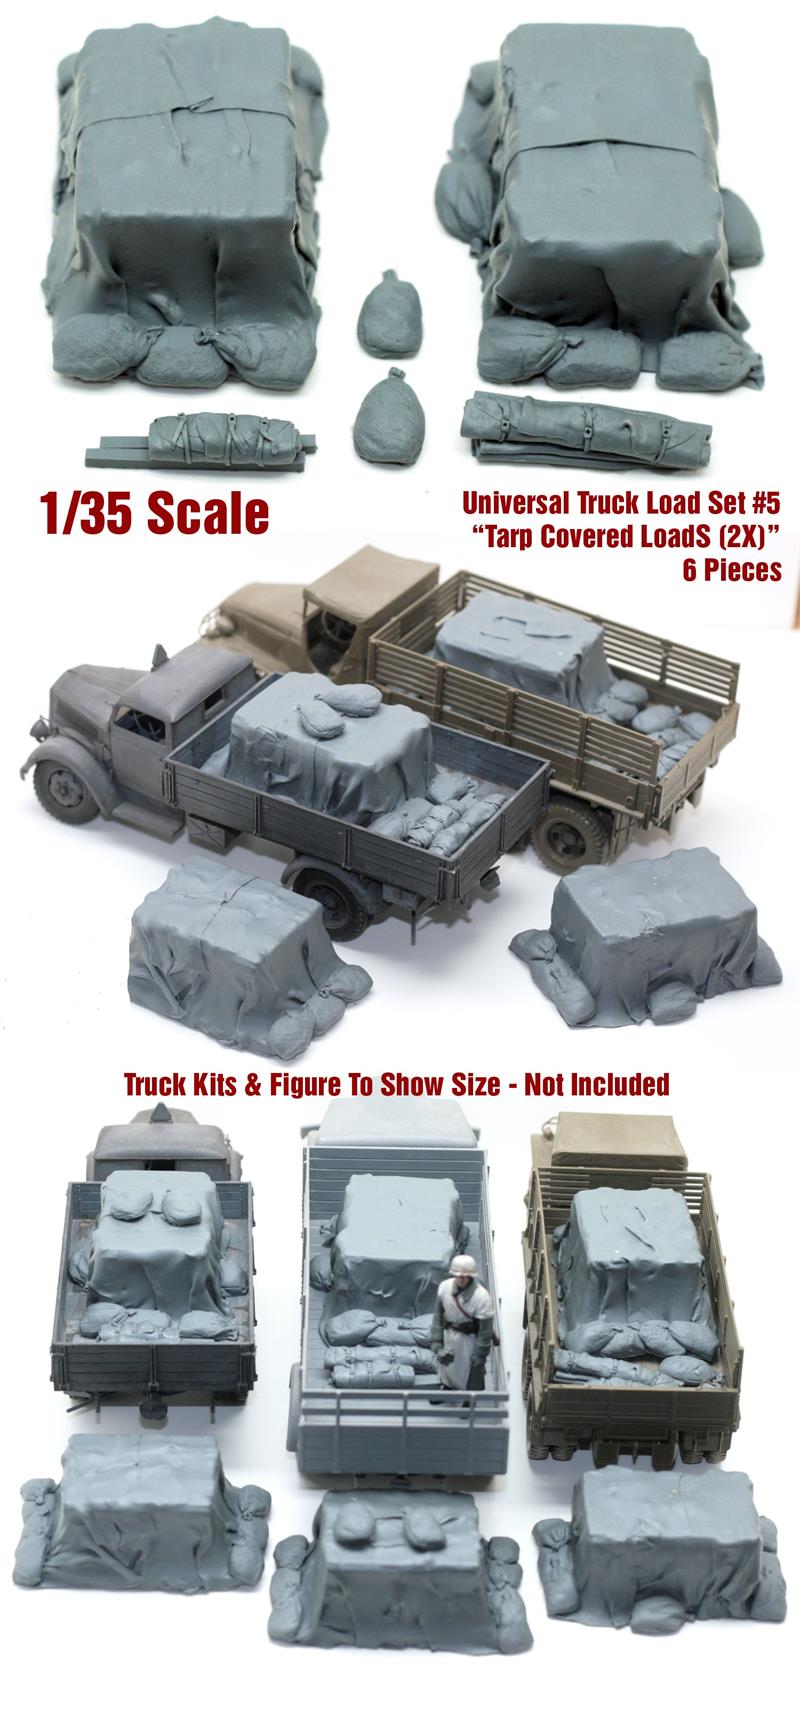 Value Gear GUT05 1/35 Universal Truck Load Set